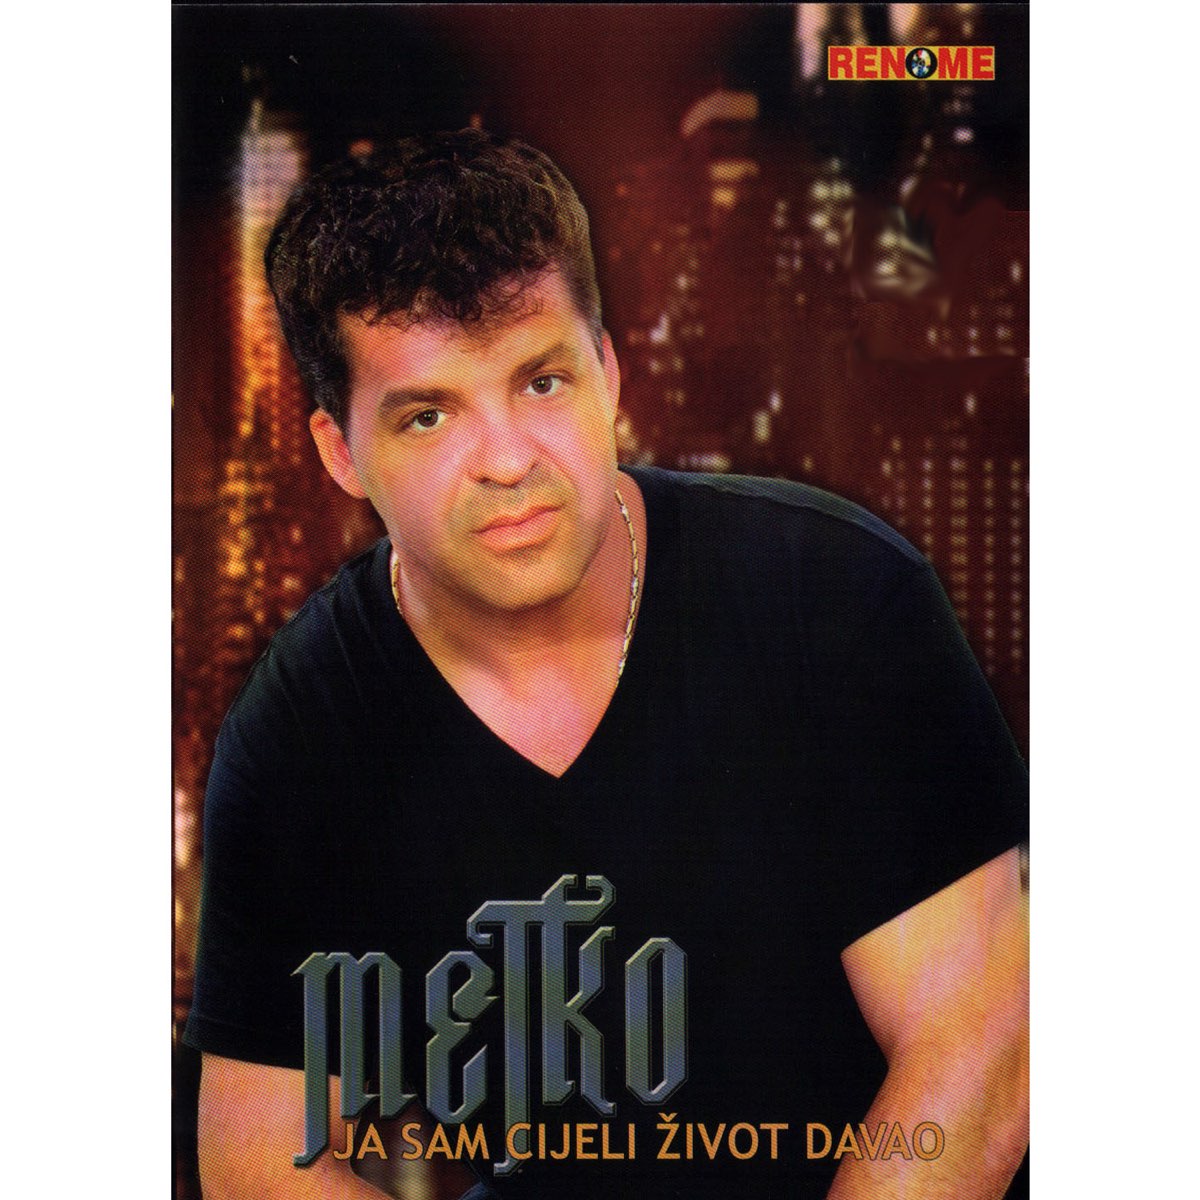 Ja Sam Cijeli Zivot Davao (Serbian Music) - Album by Metko - Apple Music